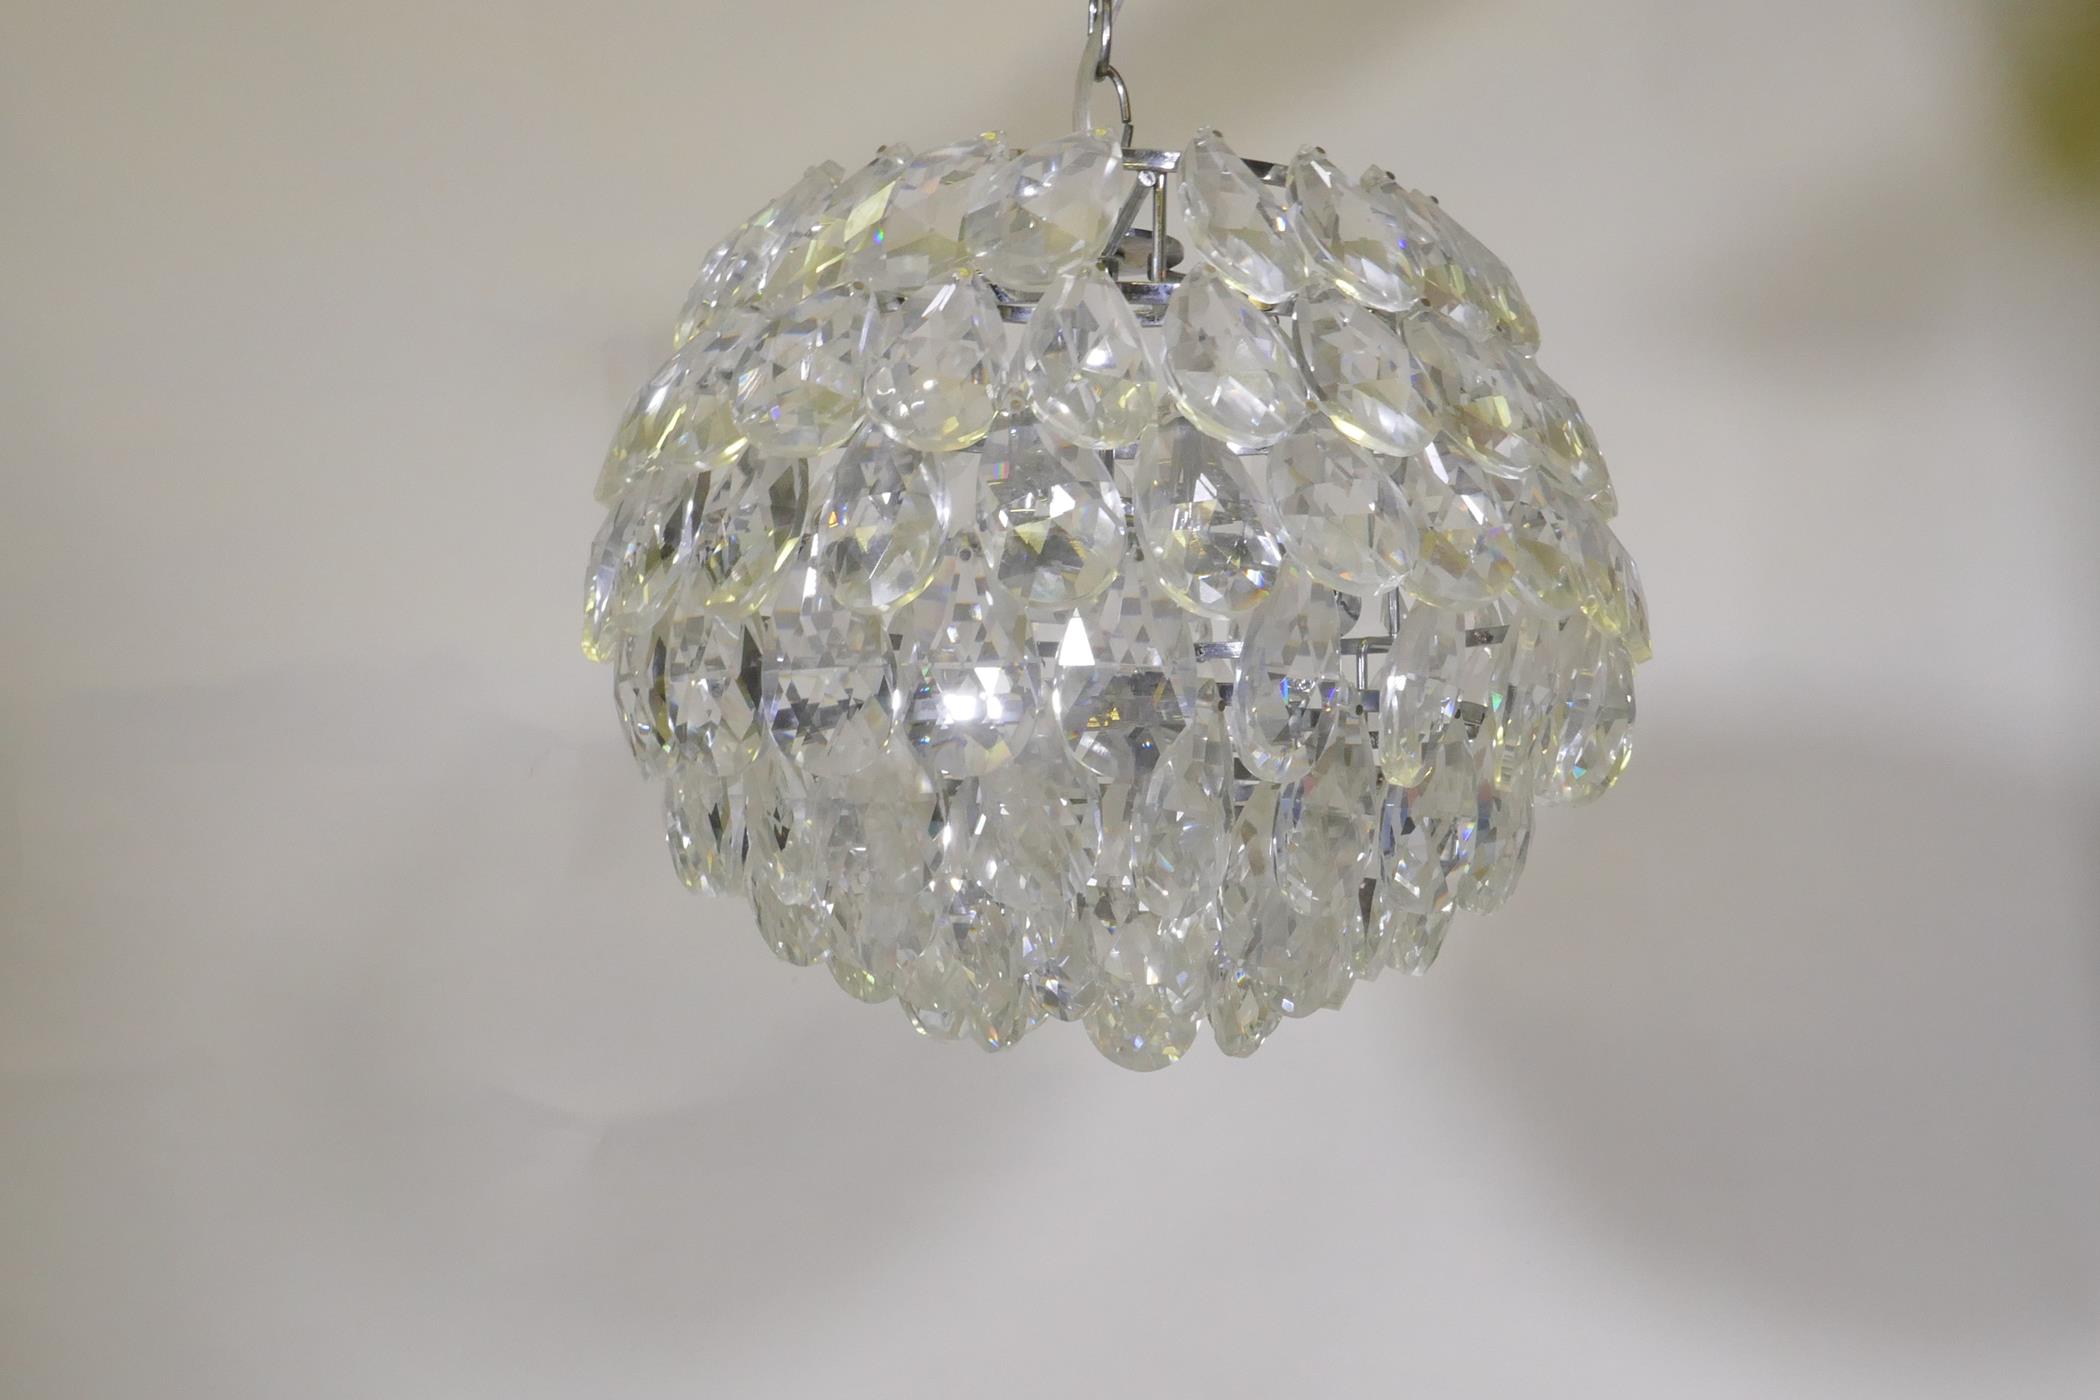 A John Lewis Alexa crystal glass ceiling lamp, 28cm diameter - Image 2 of 2